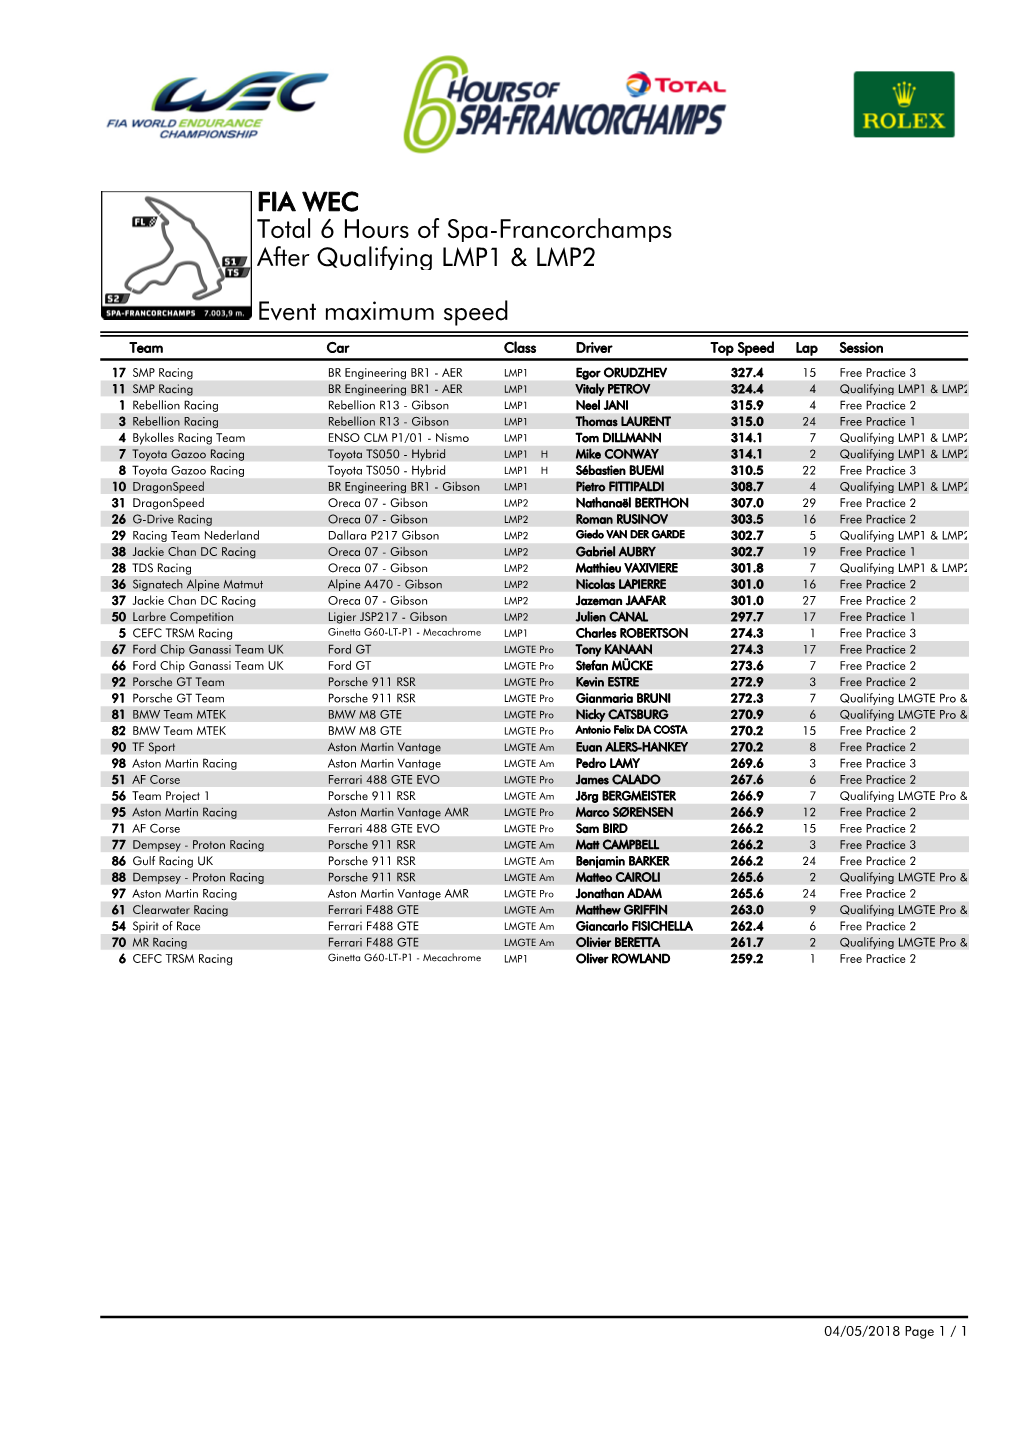 Event Maximum Speed Qualifying LMP1 & LMP2 Total 6 Hours of Spa